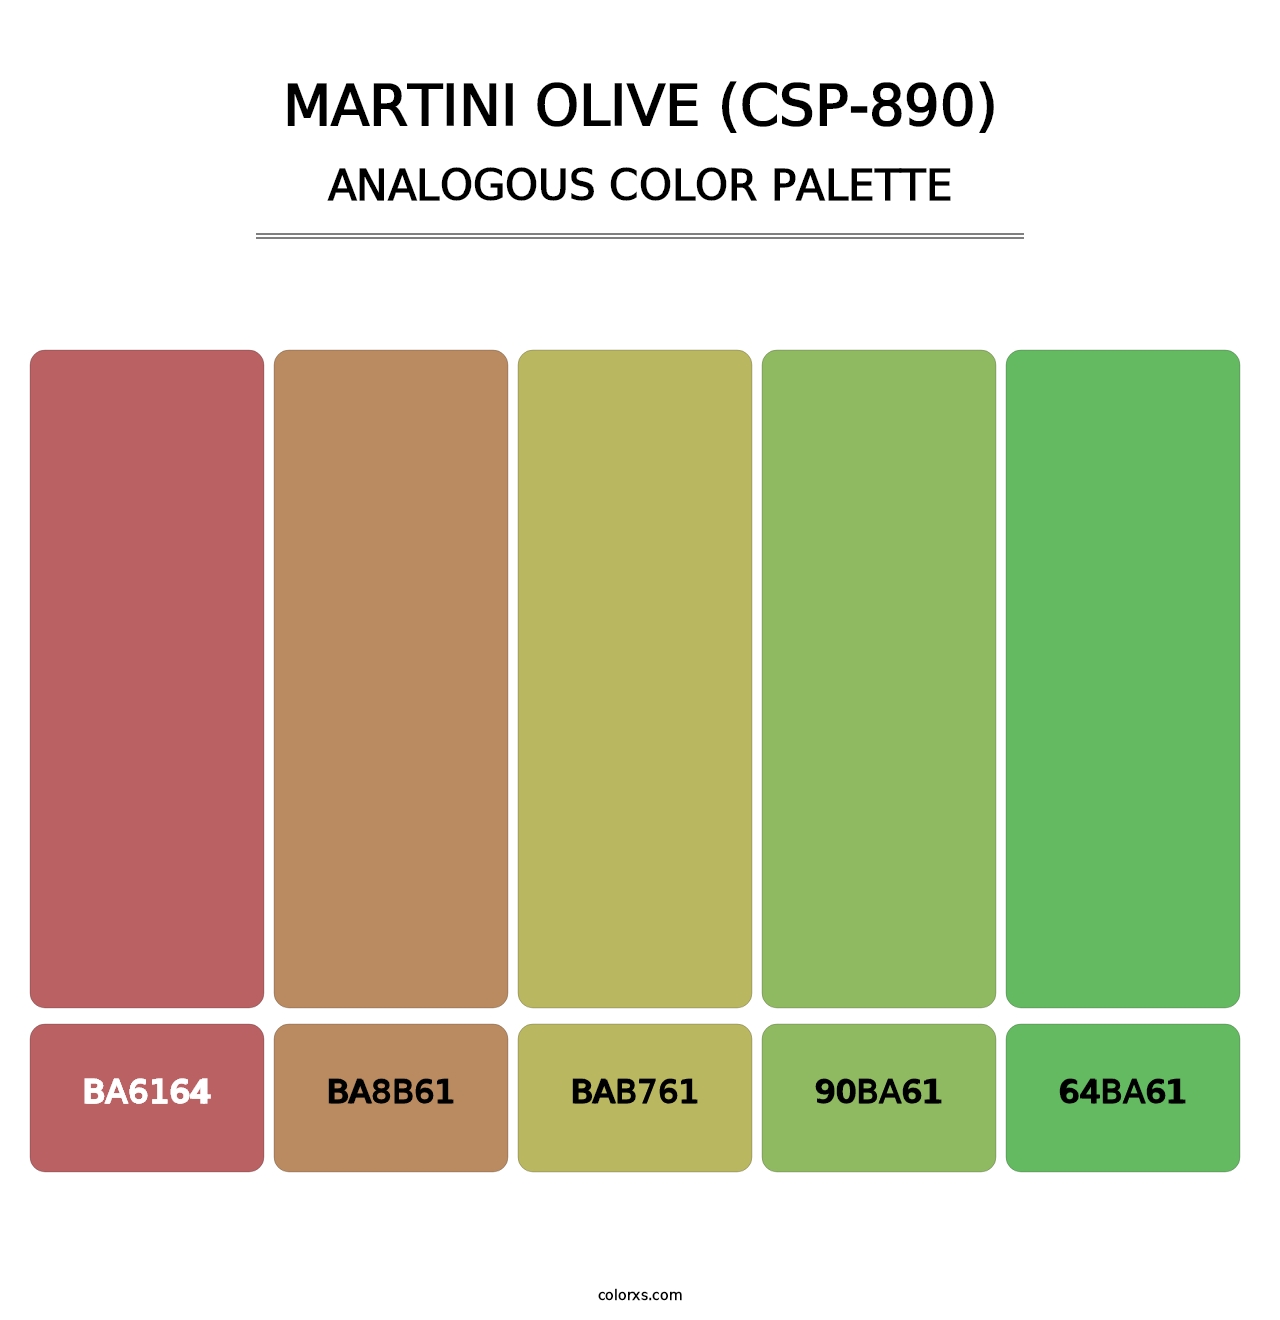 Martini Olive (CSP-890) - Analogous Color Palette